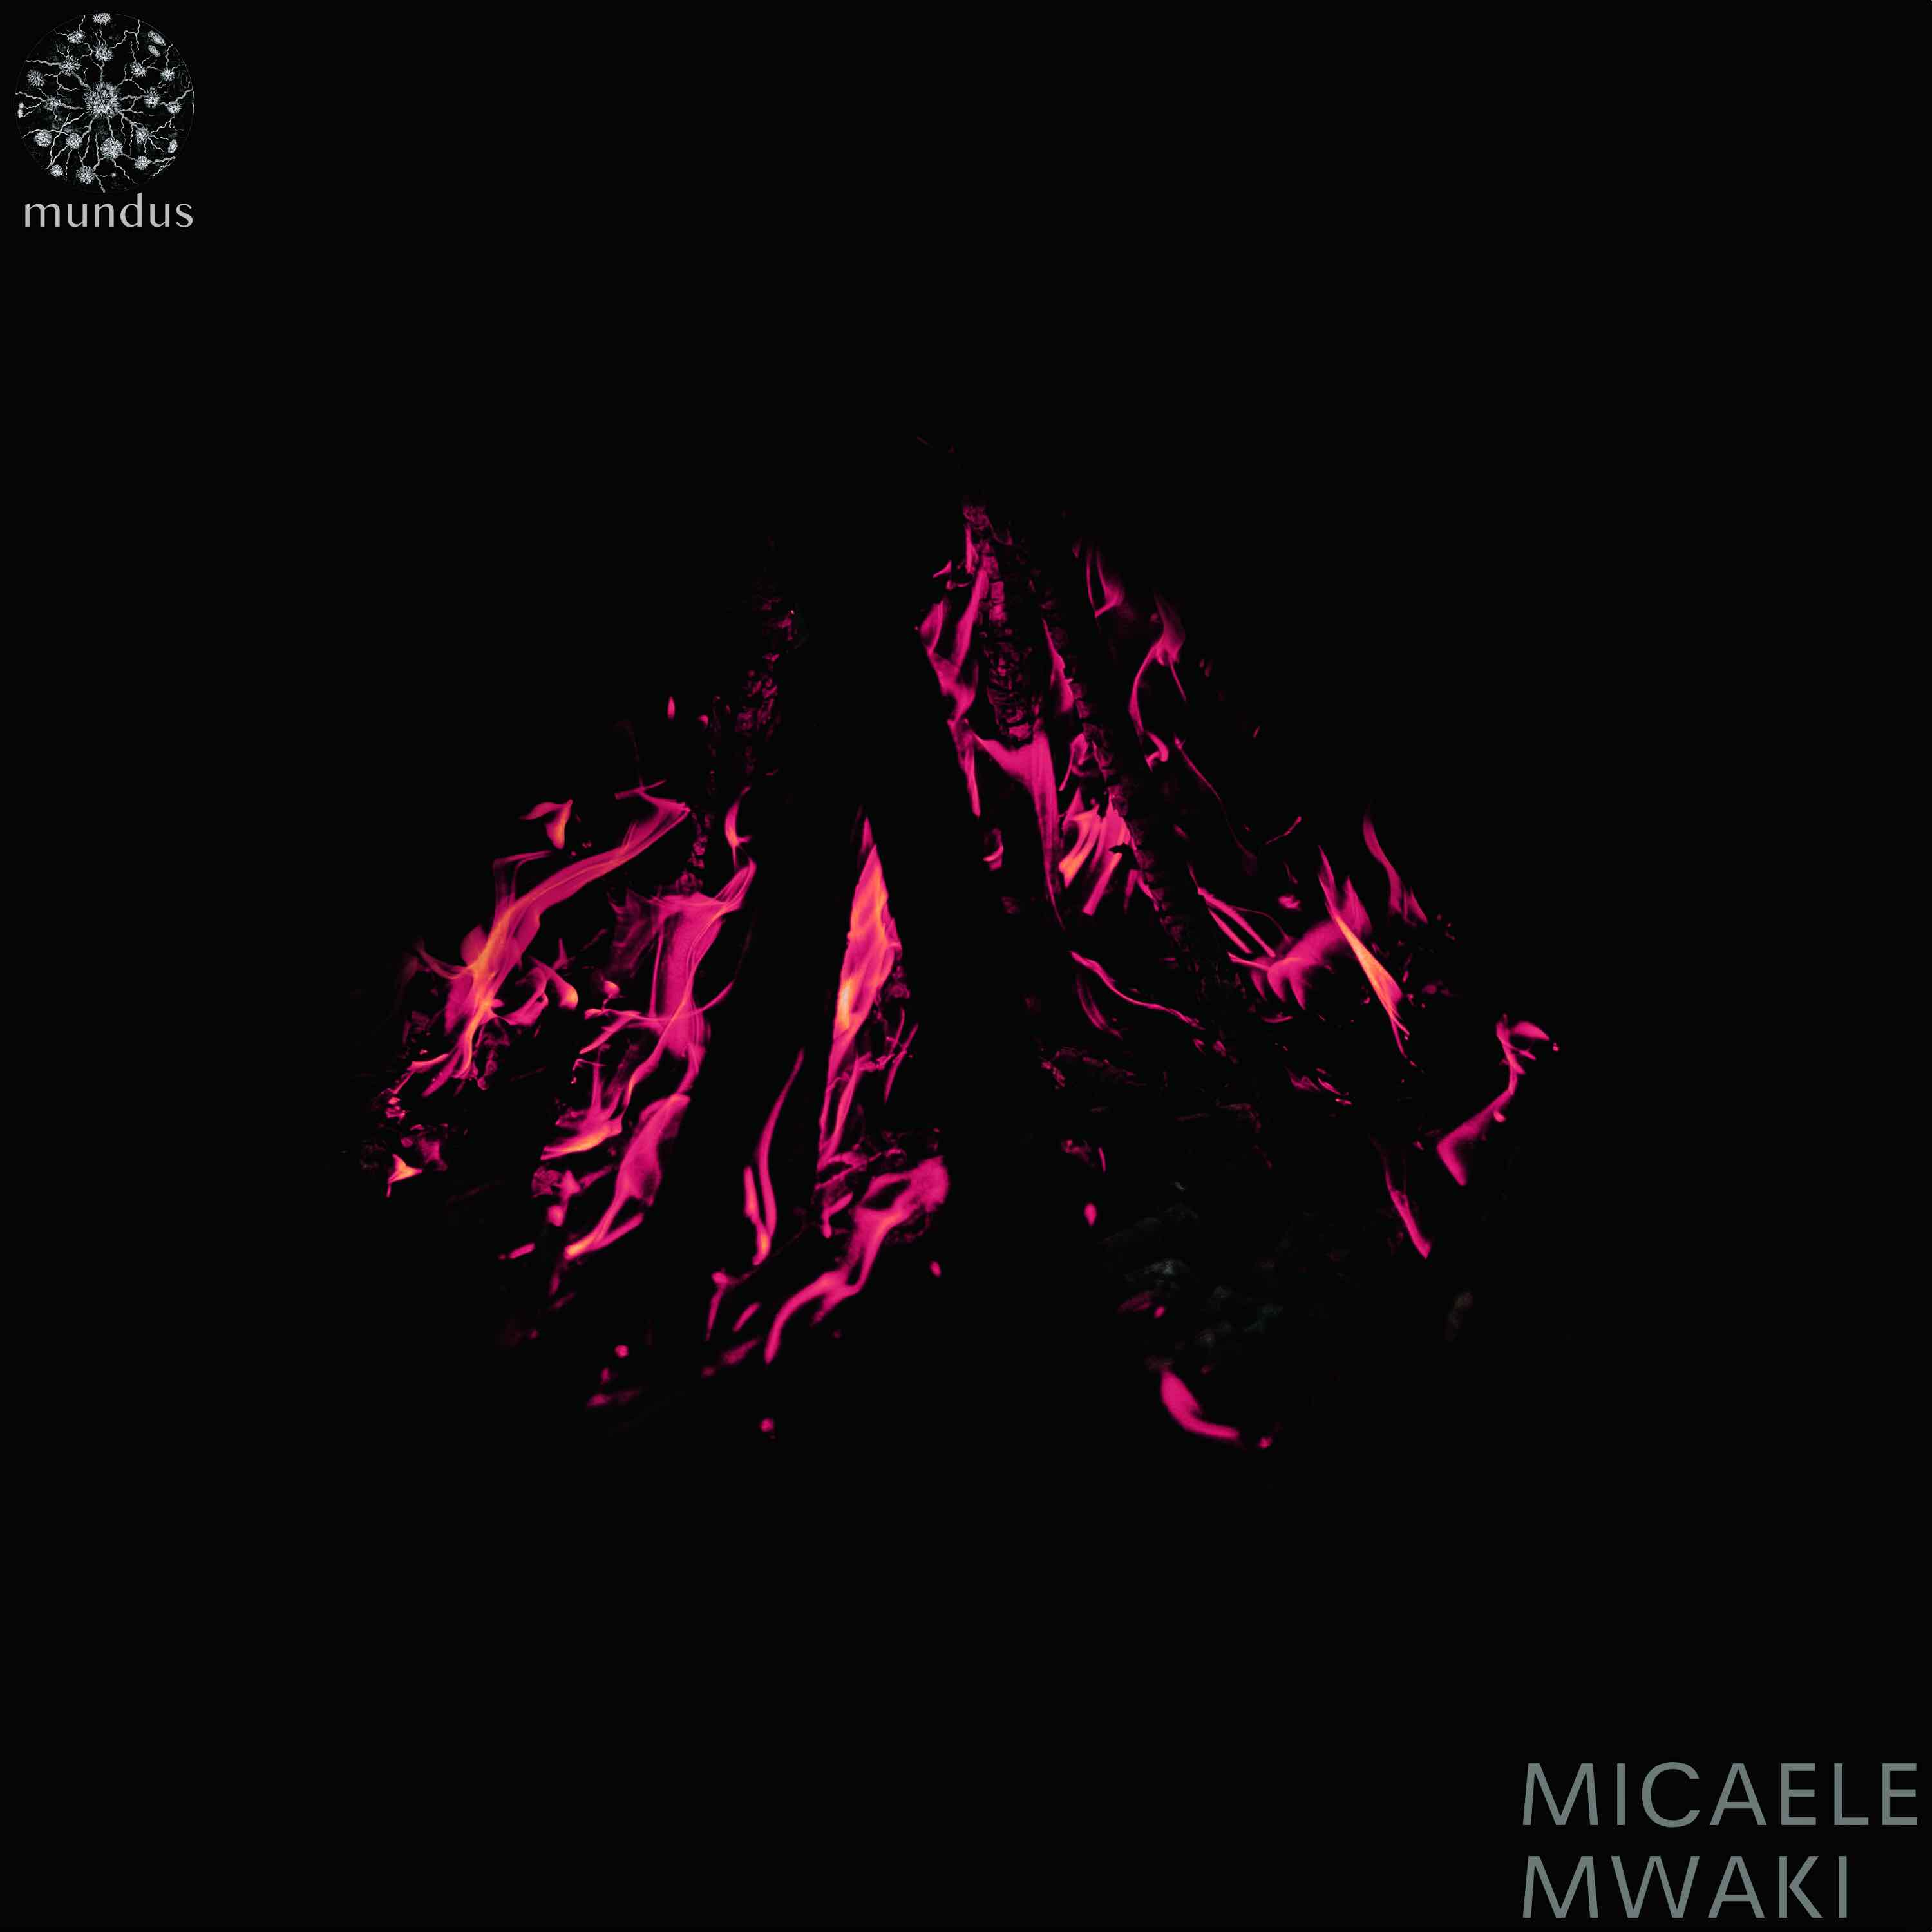 Micaele - Mwaki (extended Mix) on Revolution Radio